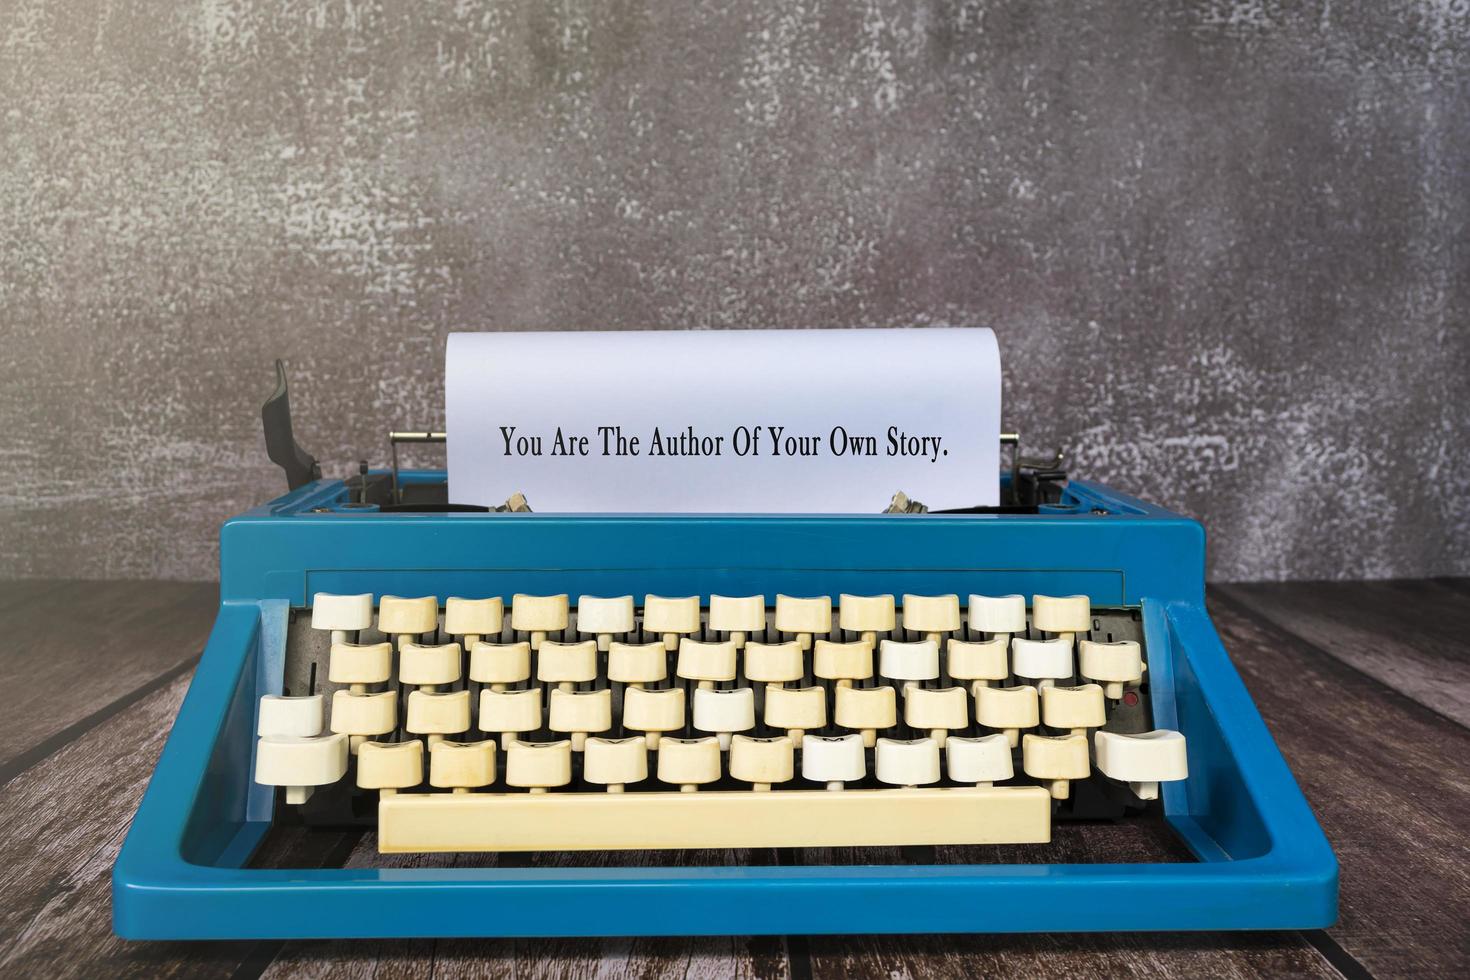 cita motivacional e inspiradora escrita en una vieja máquina de escribir foto